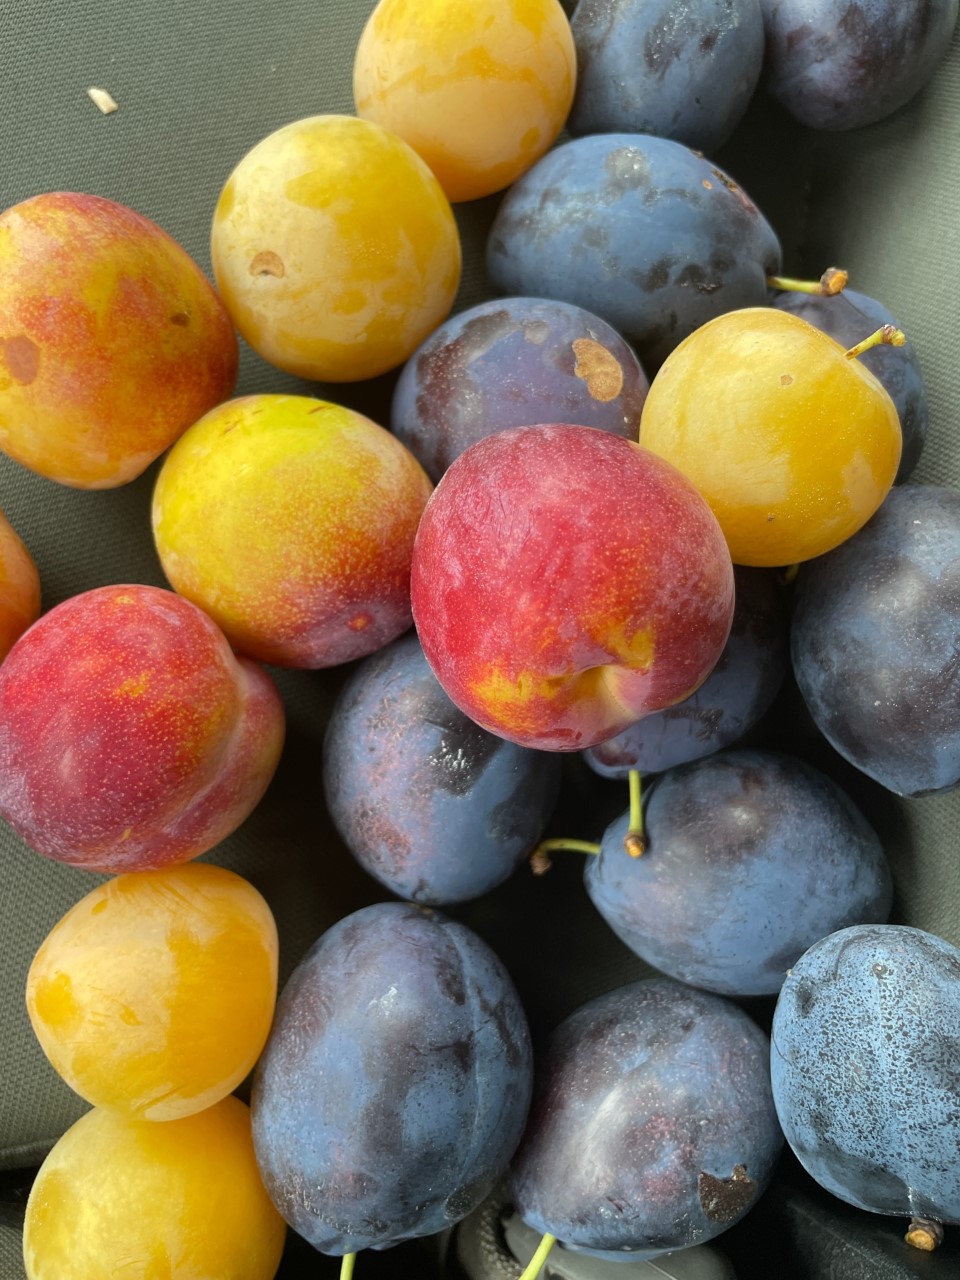 Assortment of plums.